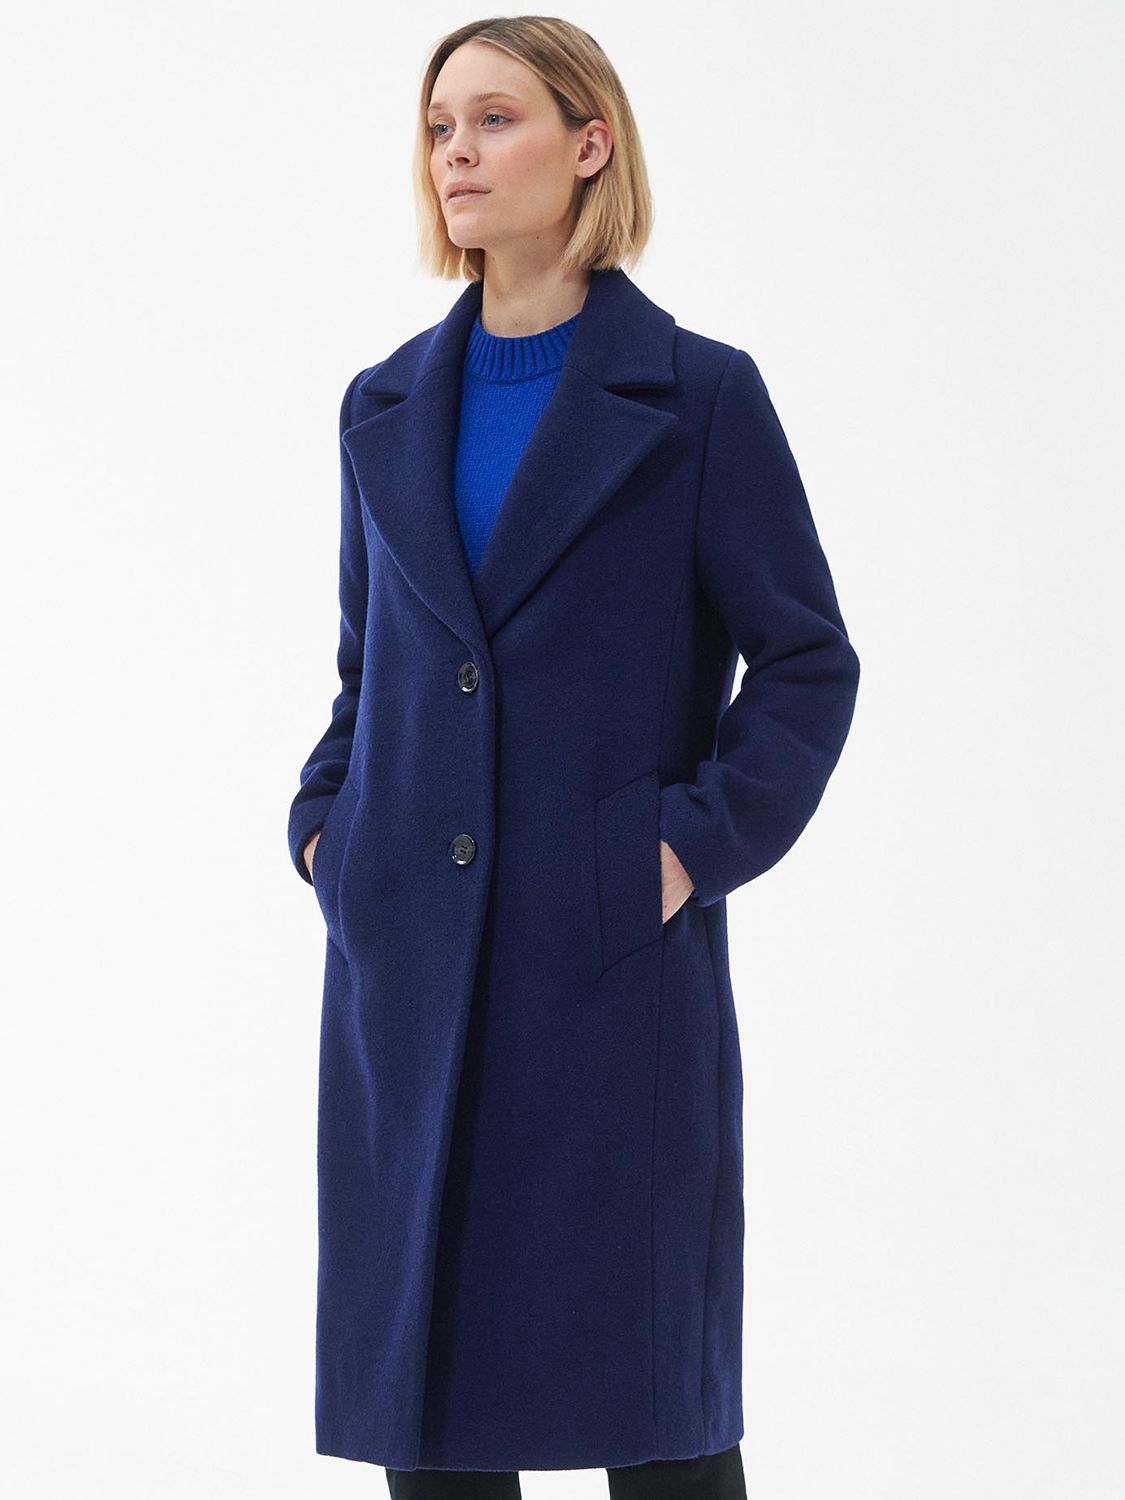 Barbour Angelina Wool Blend Coat, Azure Blue at John Lewis & Partners